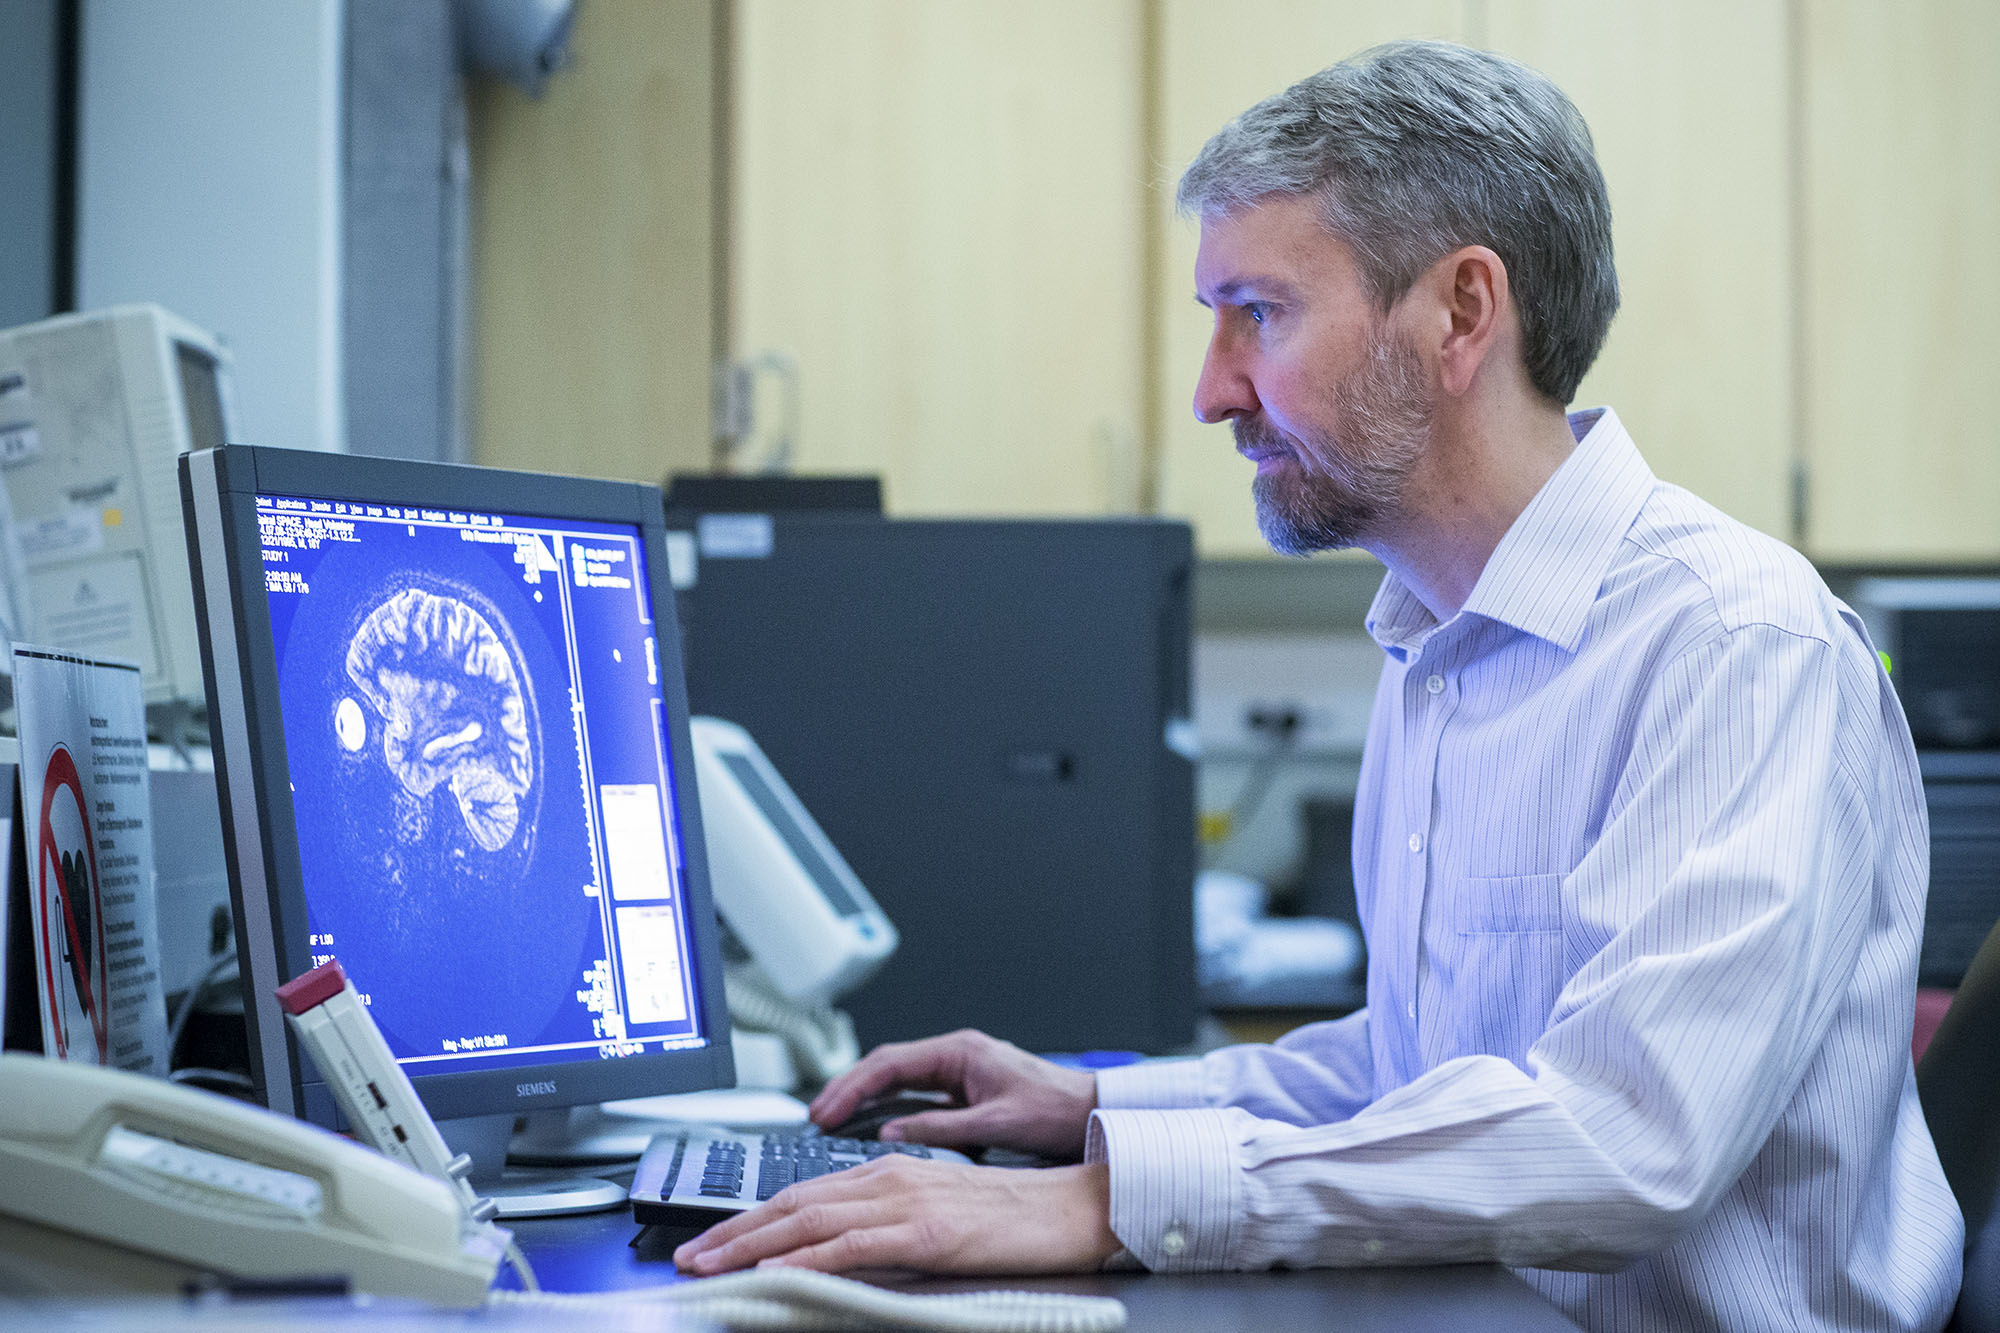 Craig Meyer looking at an MRI scan